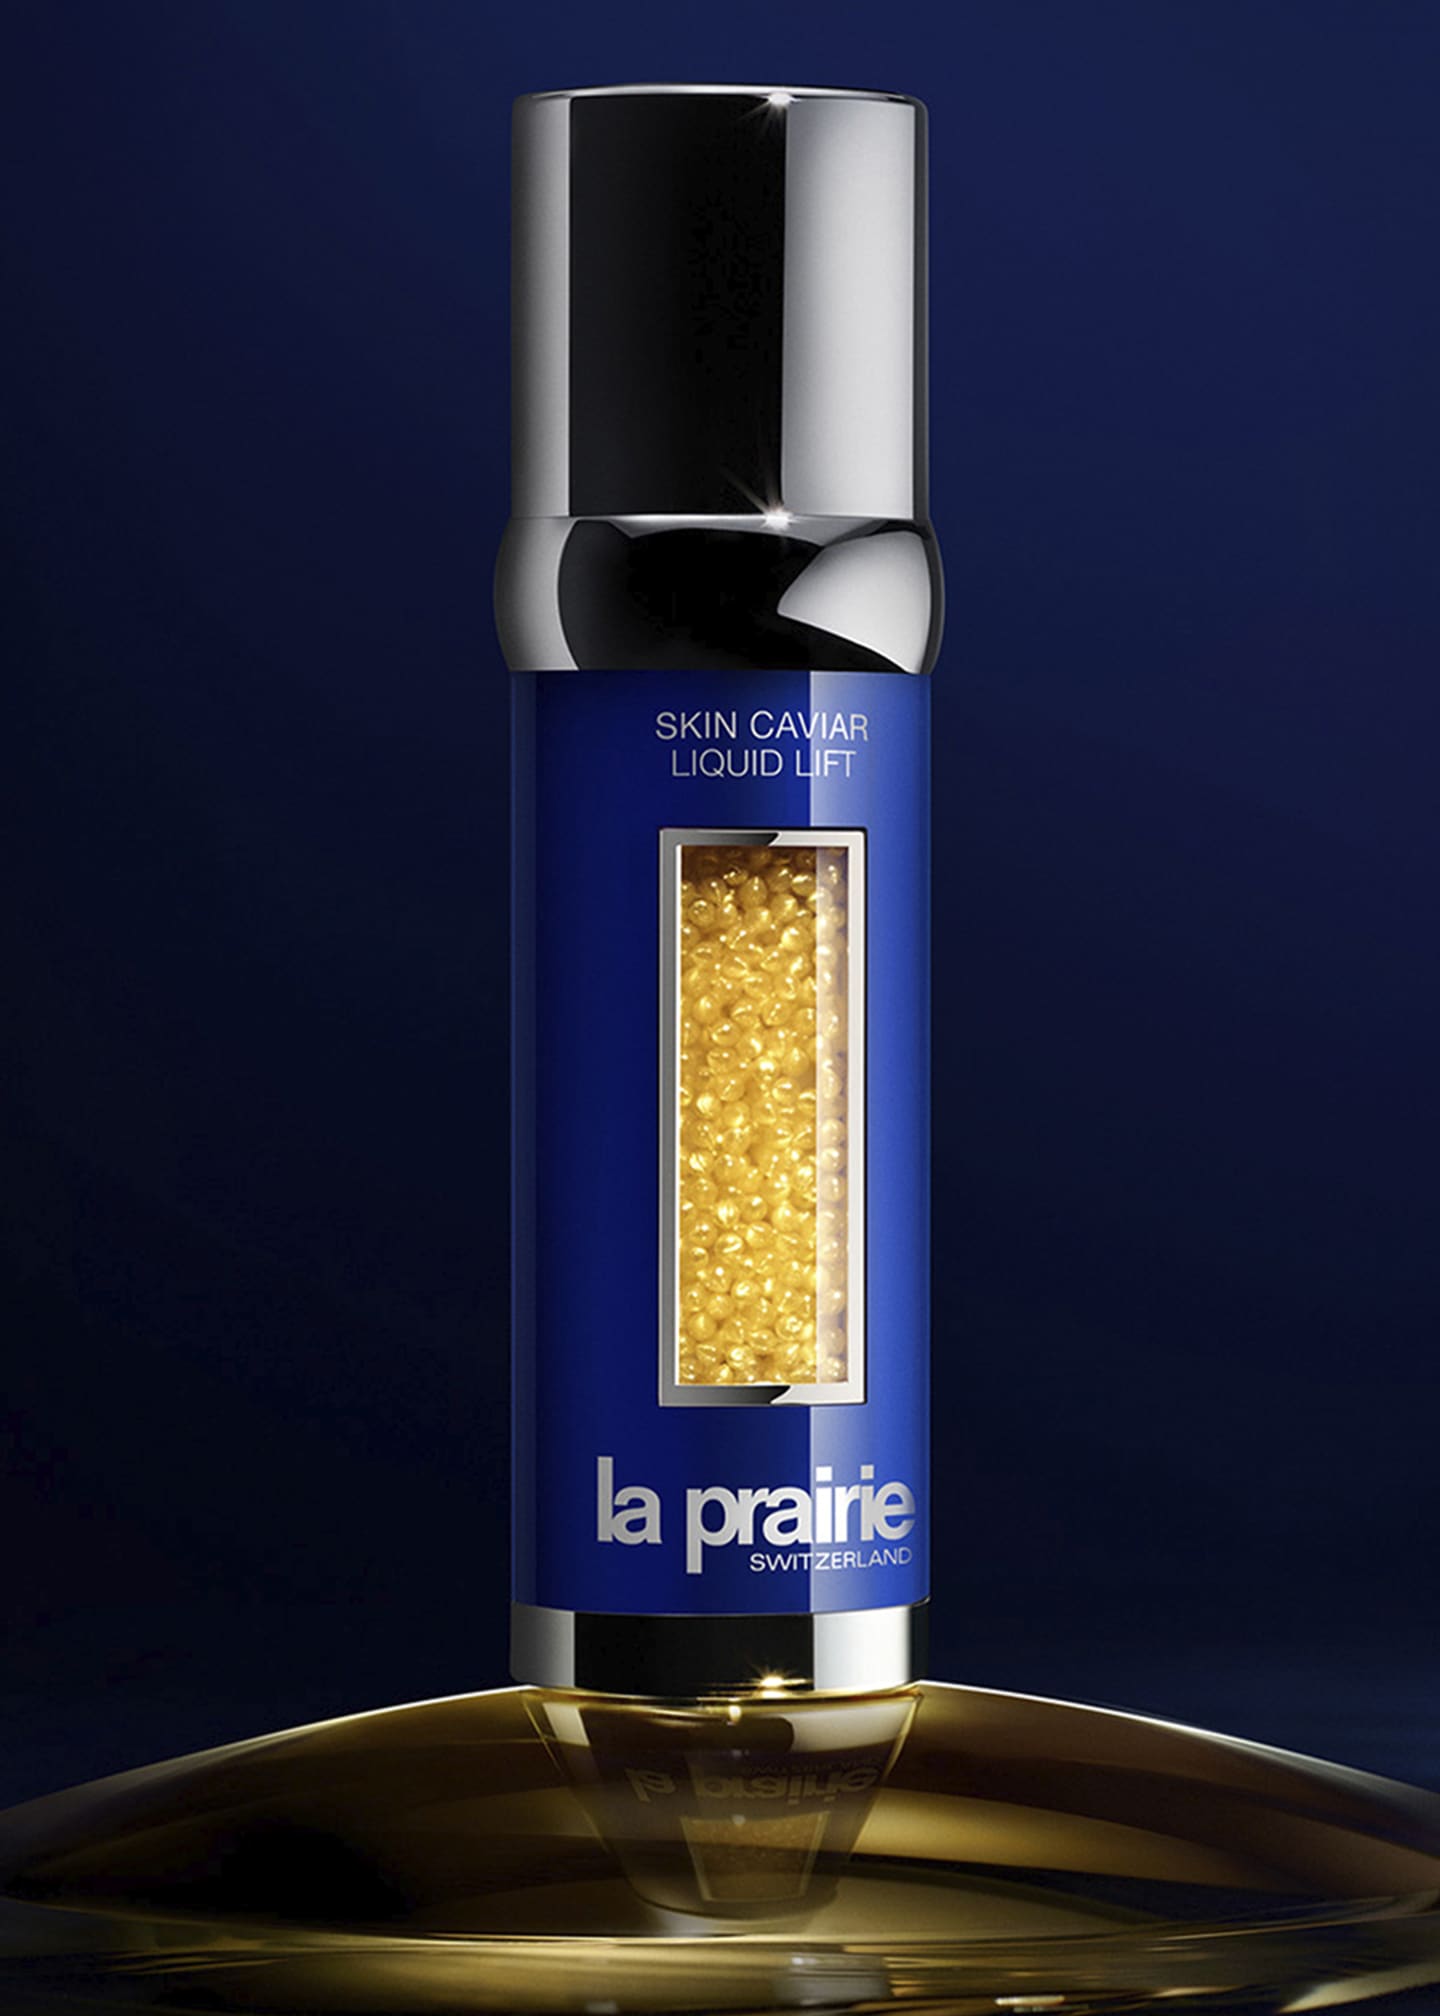 La Prairie 1.7 oz. Skin Caviar Liquid Lift Face Serum Image 3 of 5